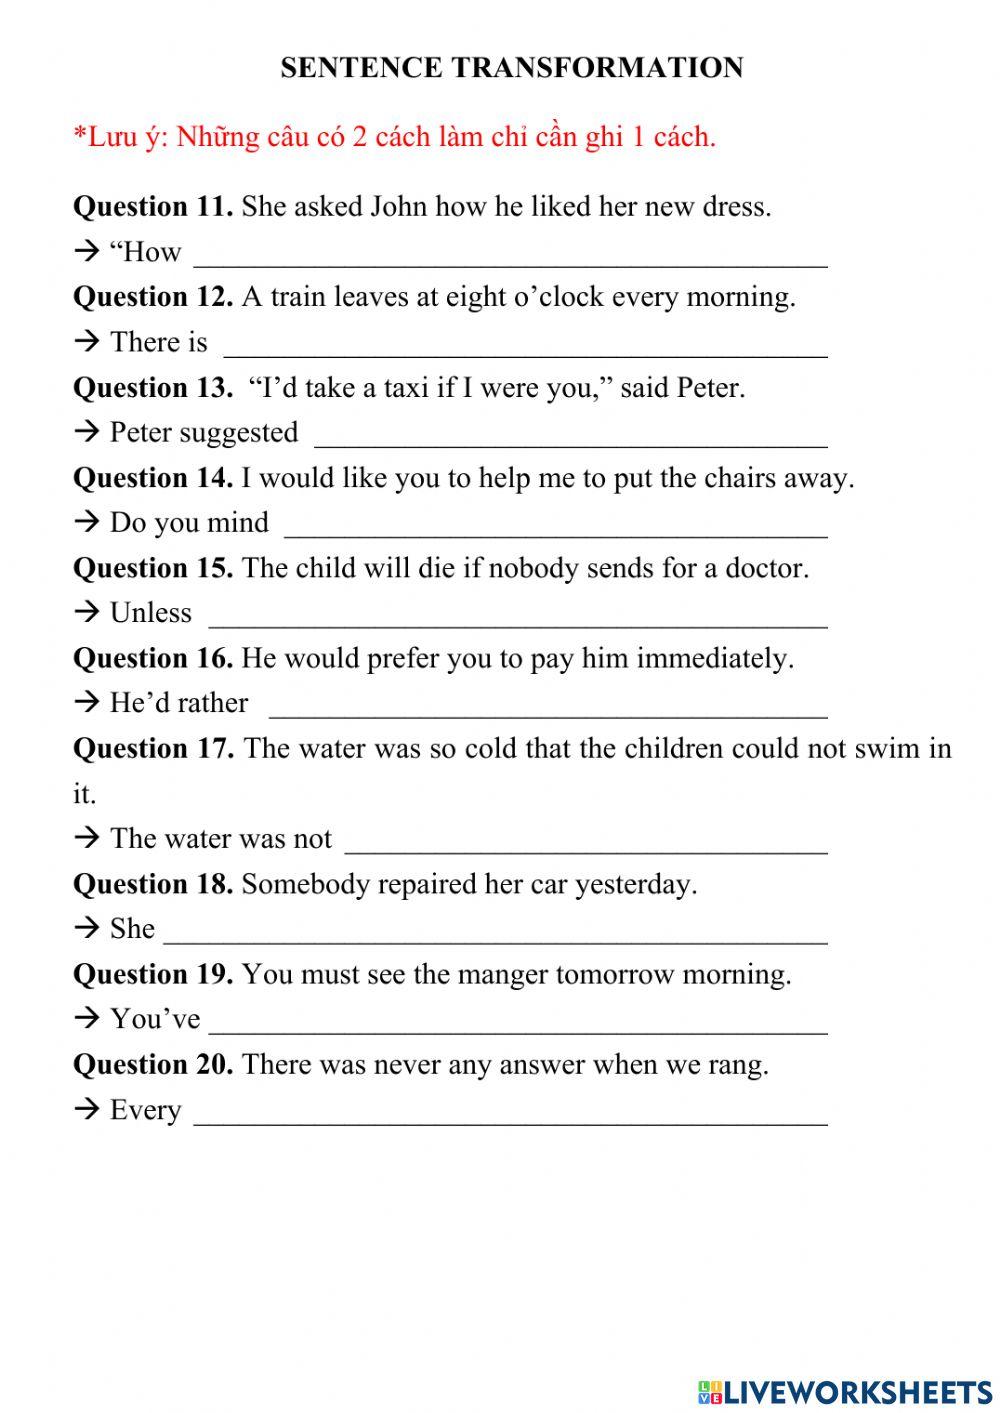 Grade 9 - Sentence trans (P2)